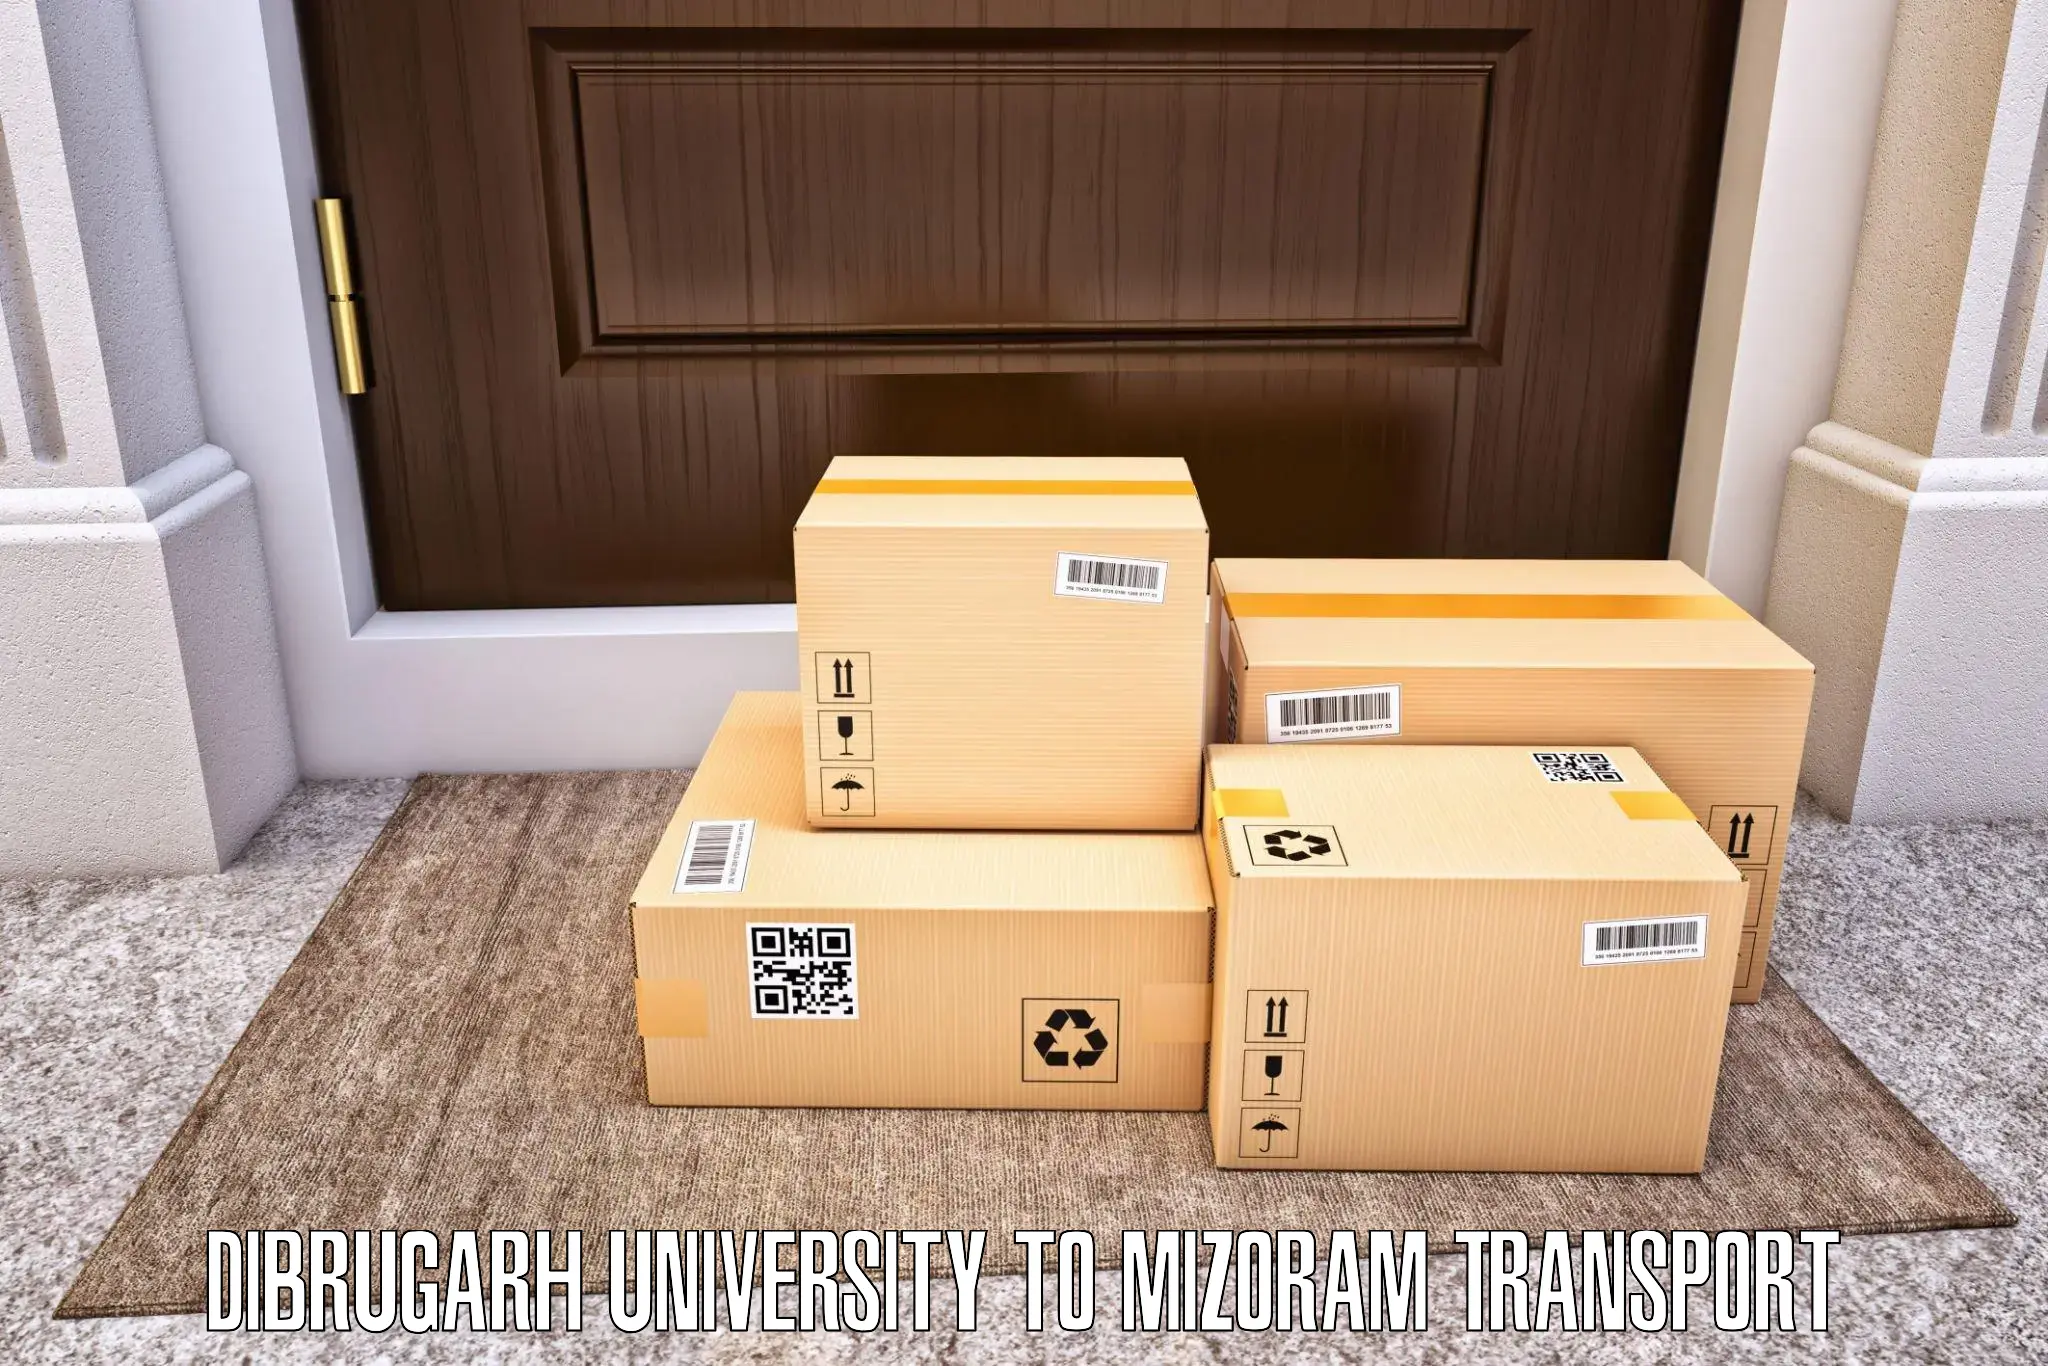 Vehicle transport services Dibrugarh University to Lunglei